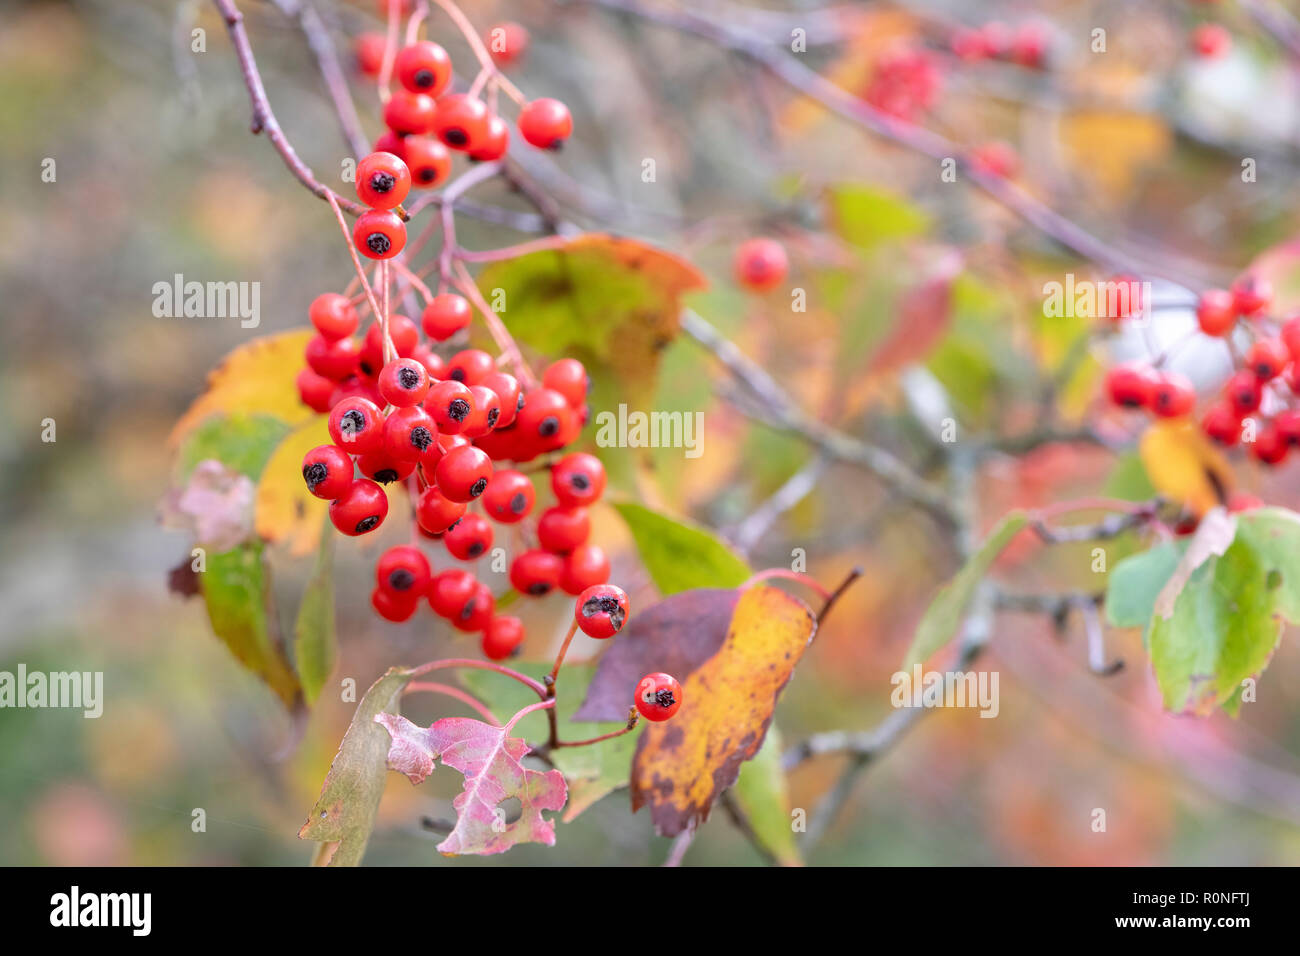 Crataegus phaenopyrum. Washington hawthorn foliage and red berries in autumn. UK Stock Photo